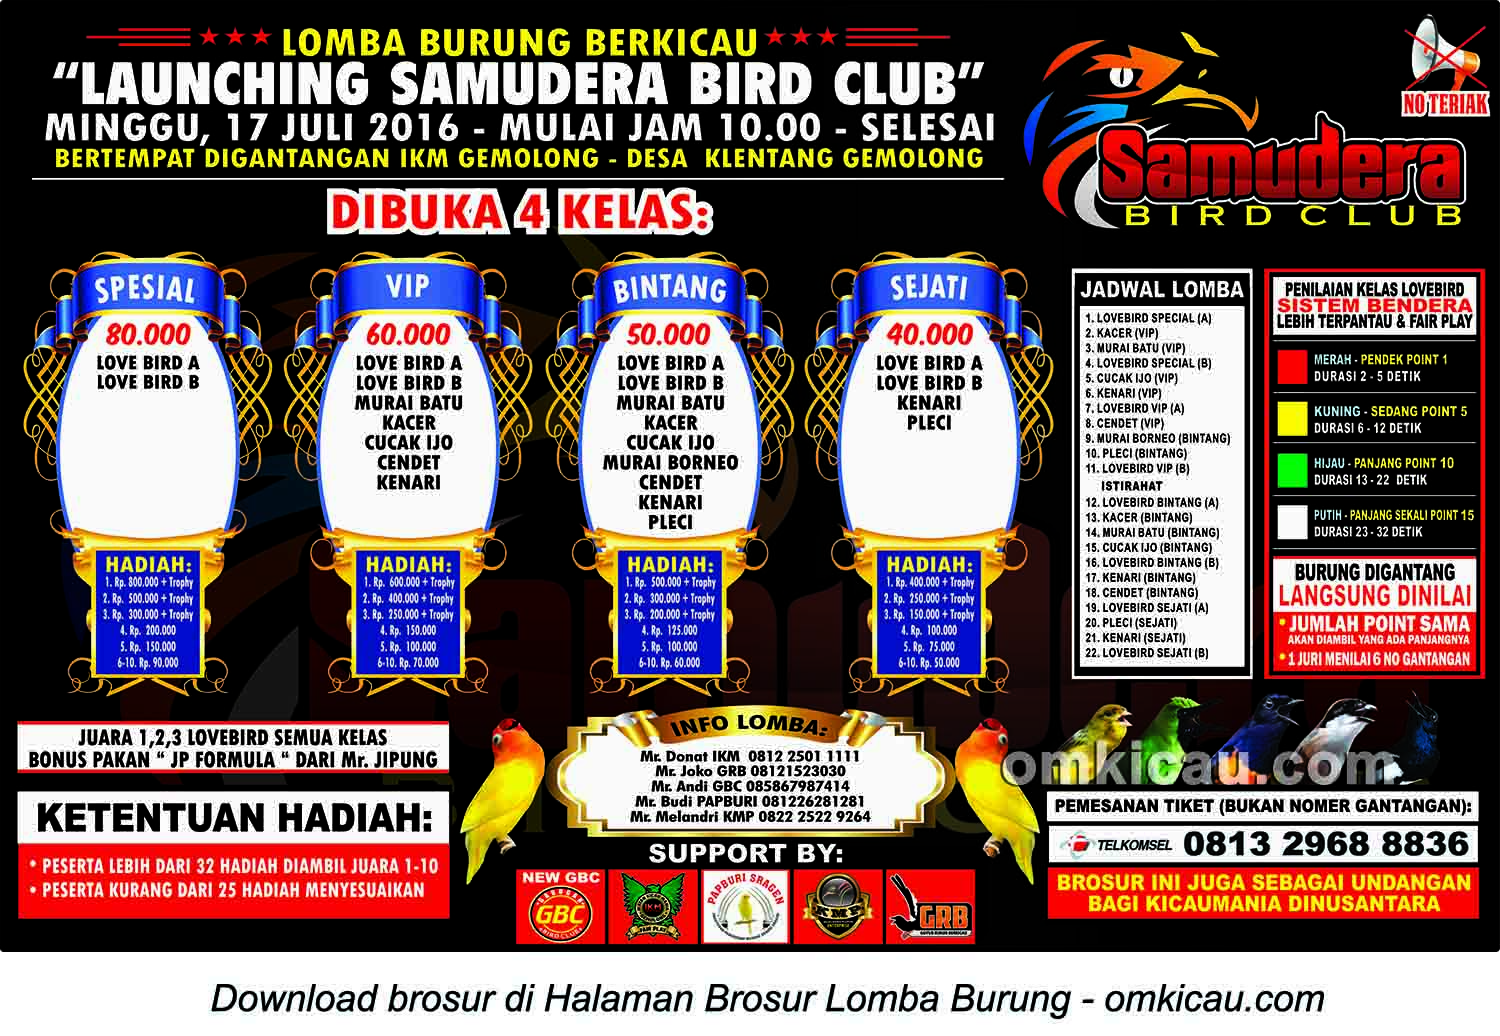 Brosur Lomba Burung Berkicau Launching Samudera Bird Club, Sragen, 17 Juli 2016